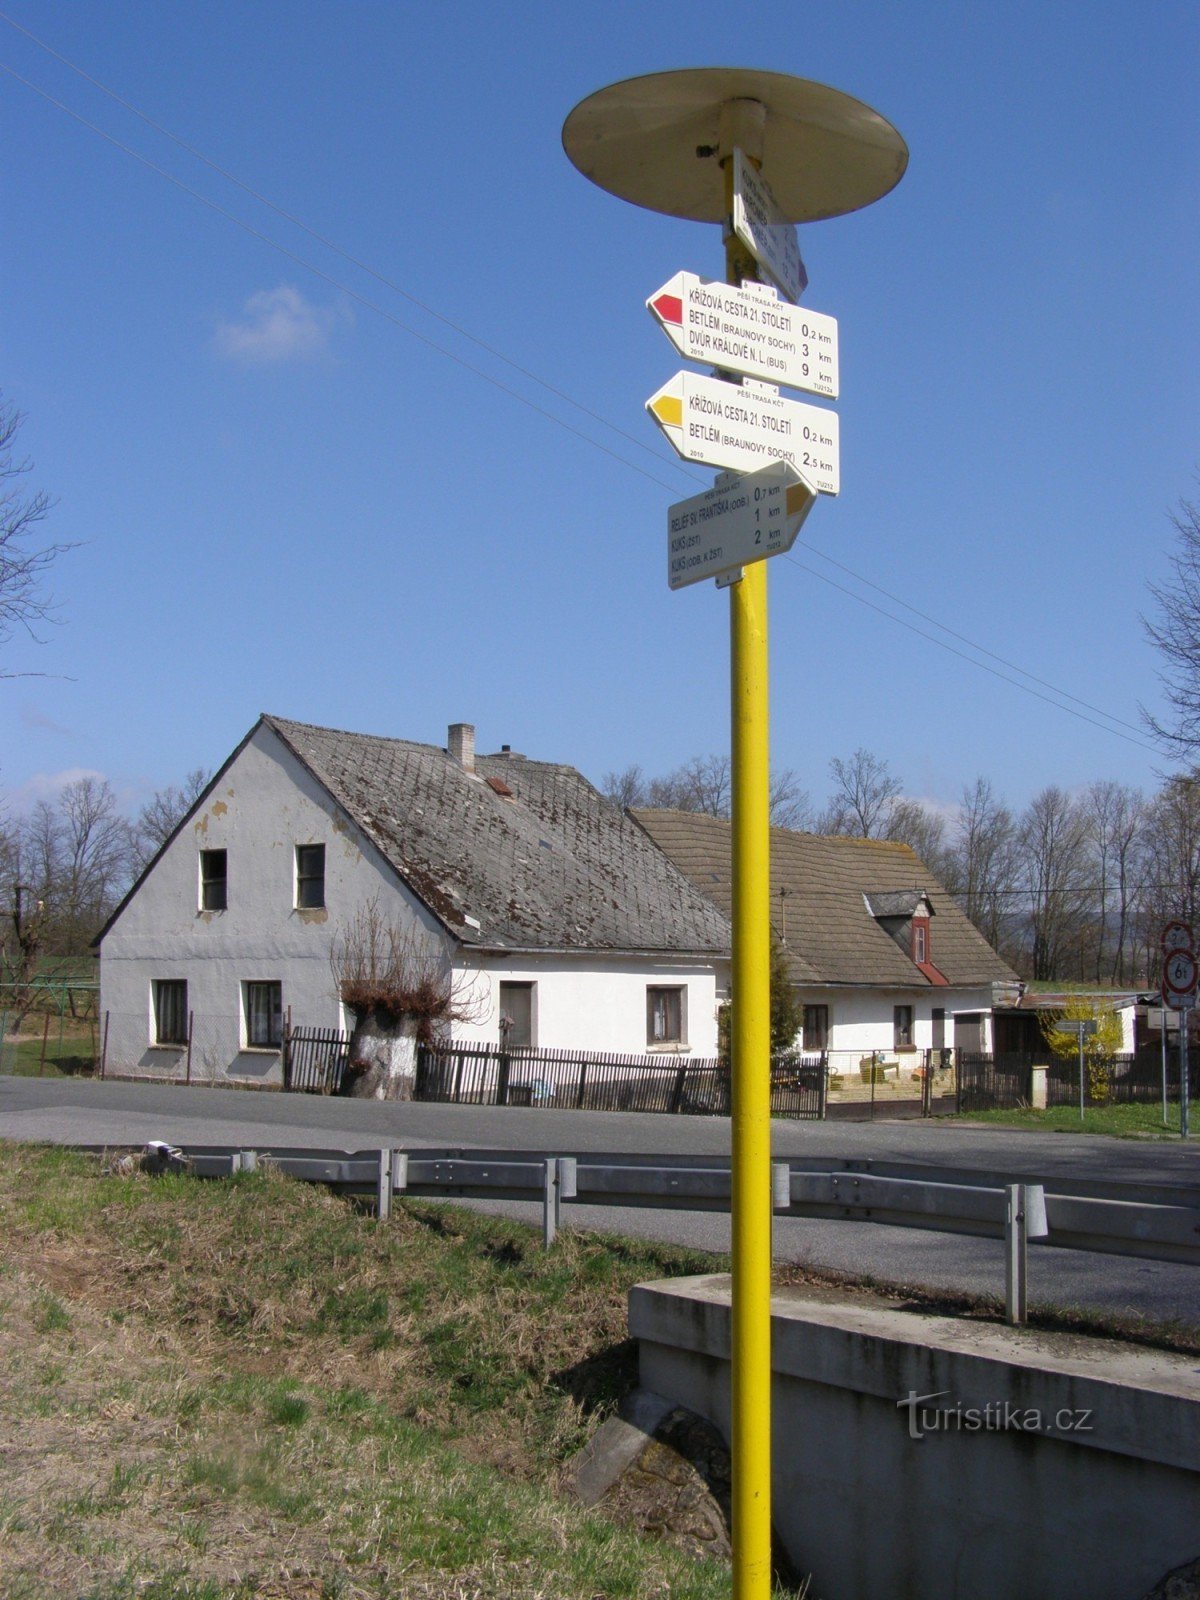 Stanovice 旅游十字路口 - 在 21 世纪的十字路口